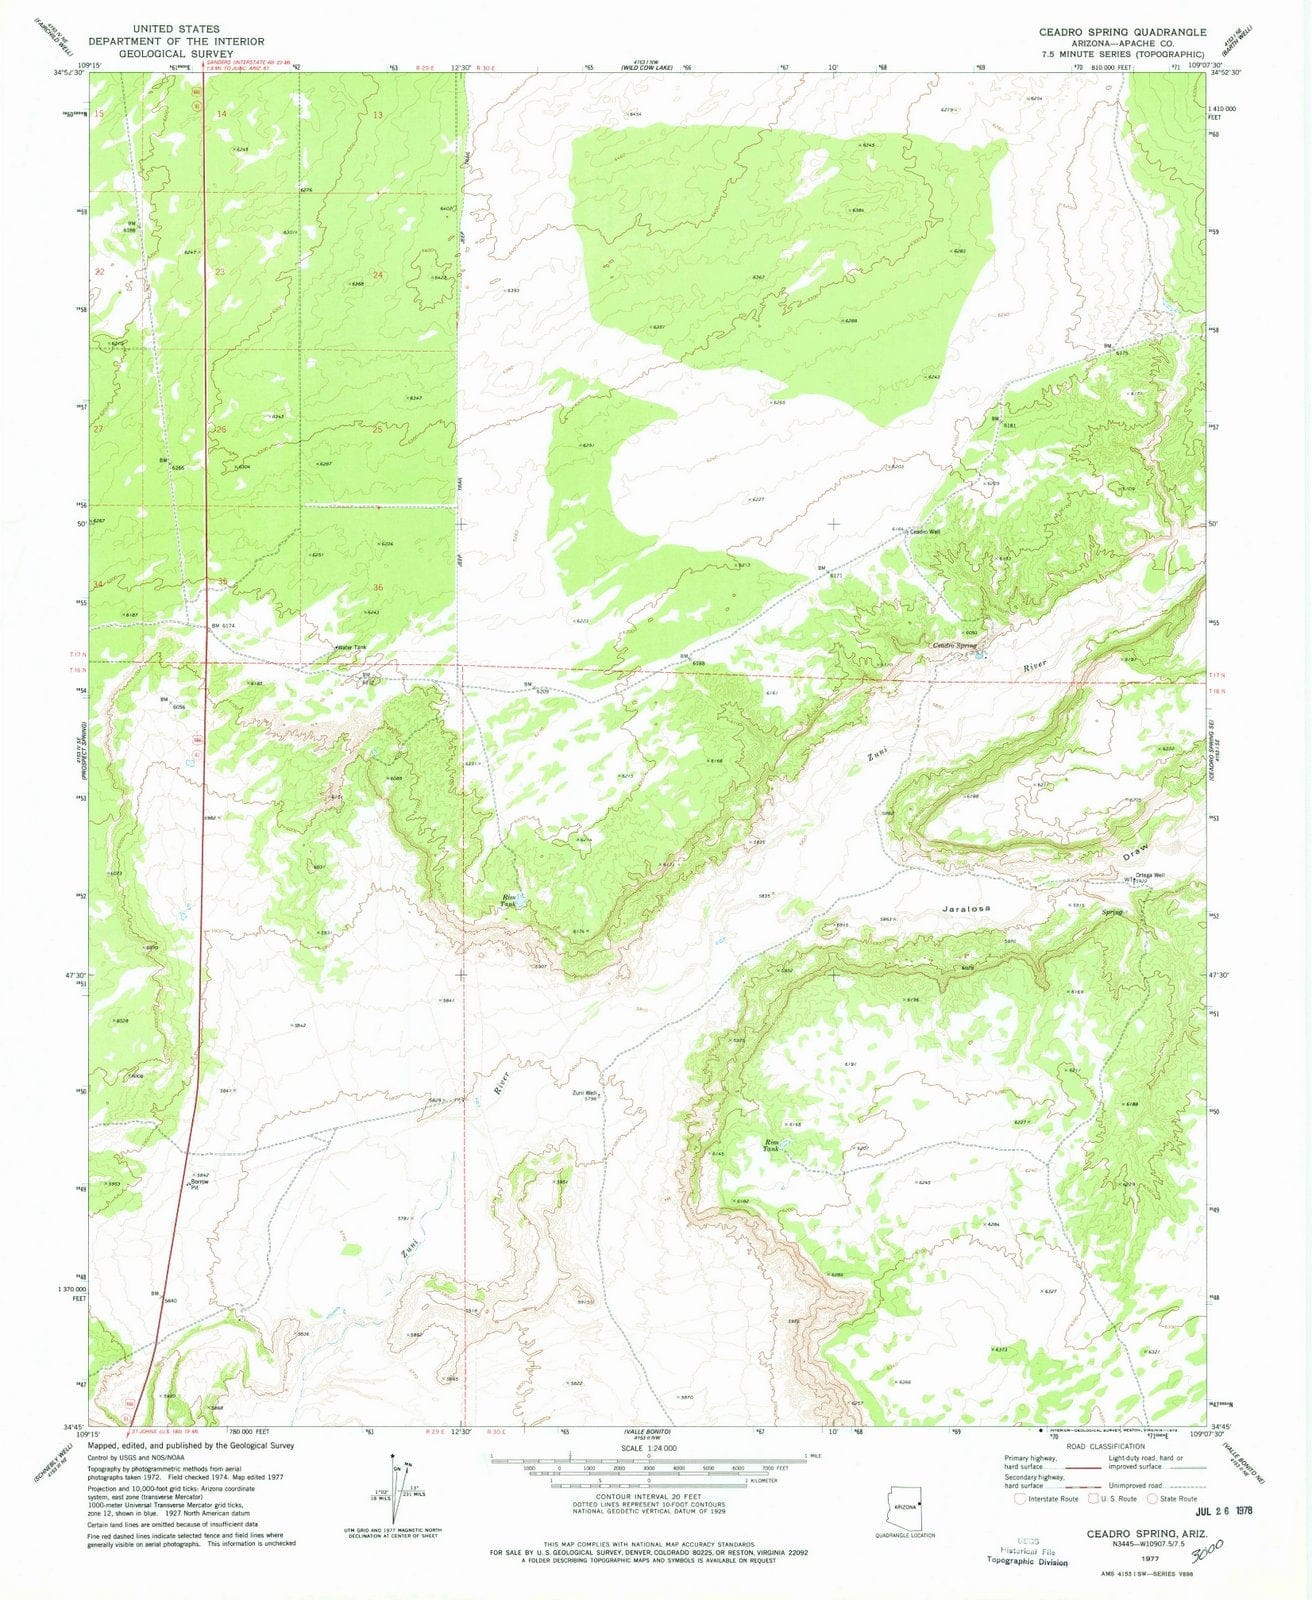 1977 Ceadro Spring, AZ - Arizona - USGS Topographic Map